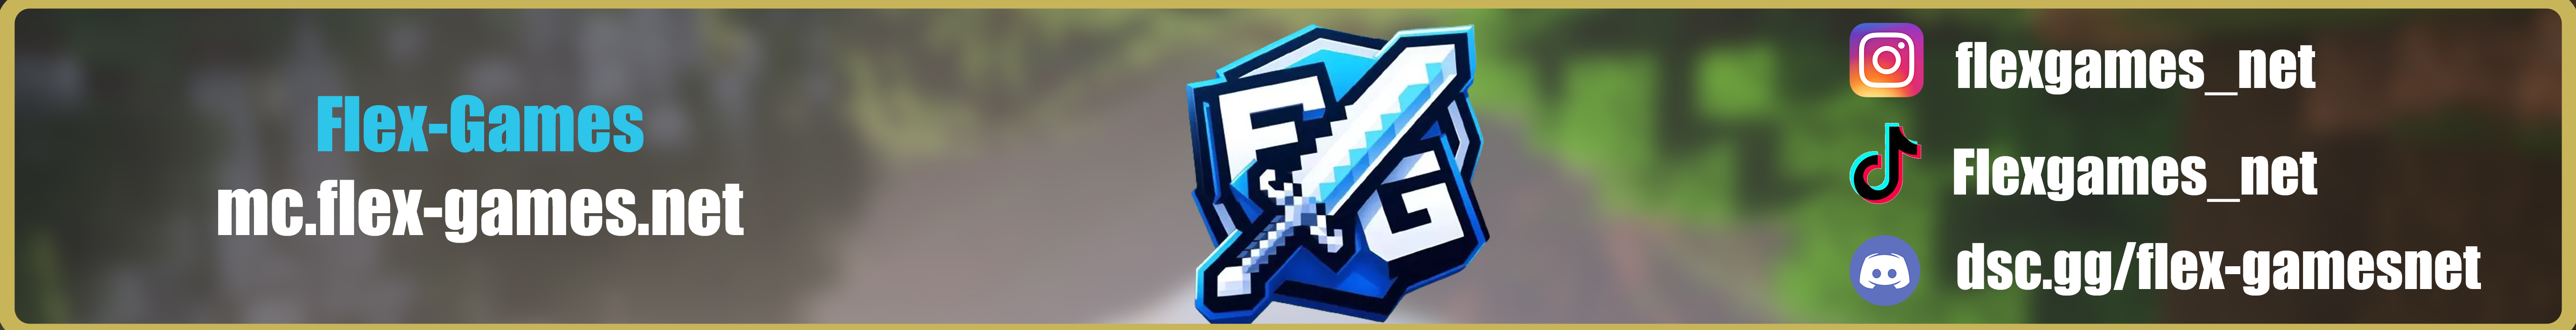 Flex-Games.net  |  Právě probíhá Nábor! banner